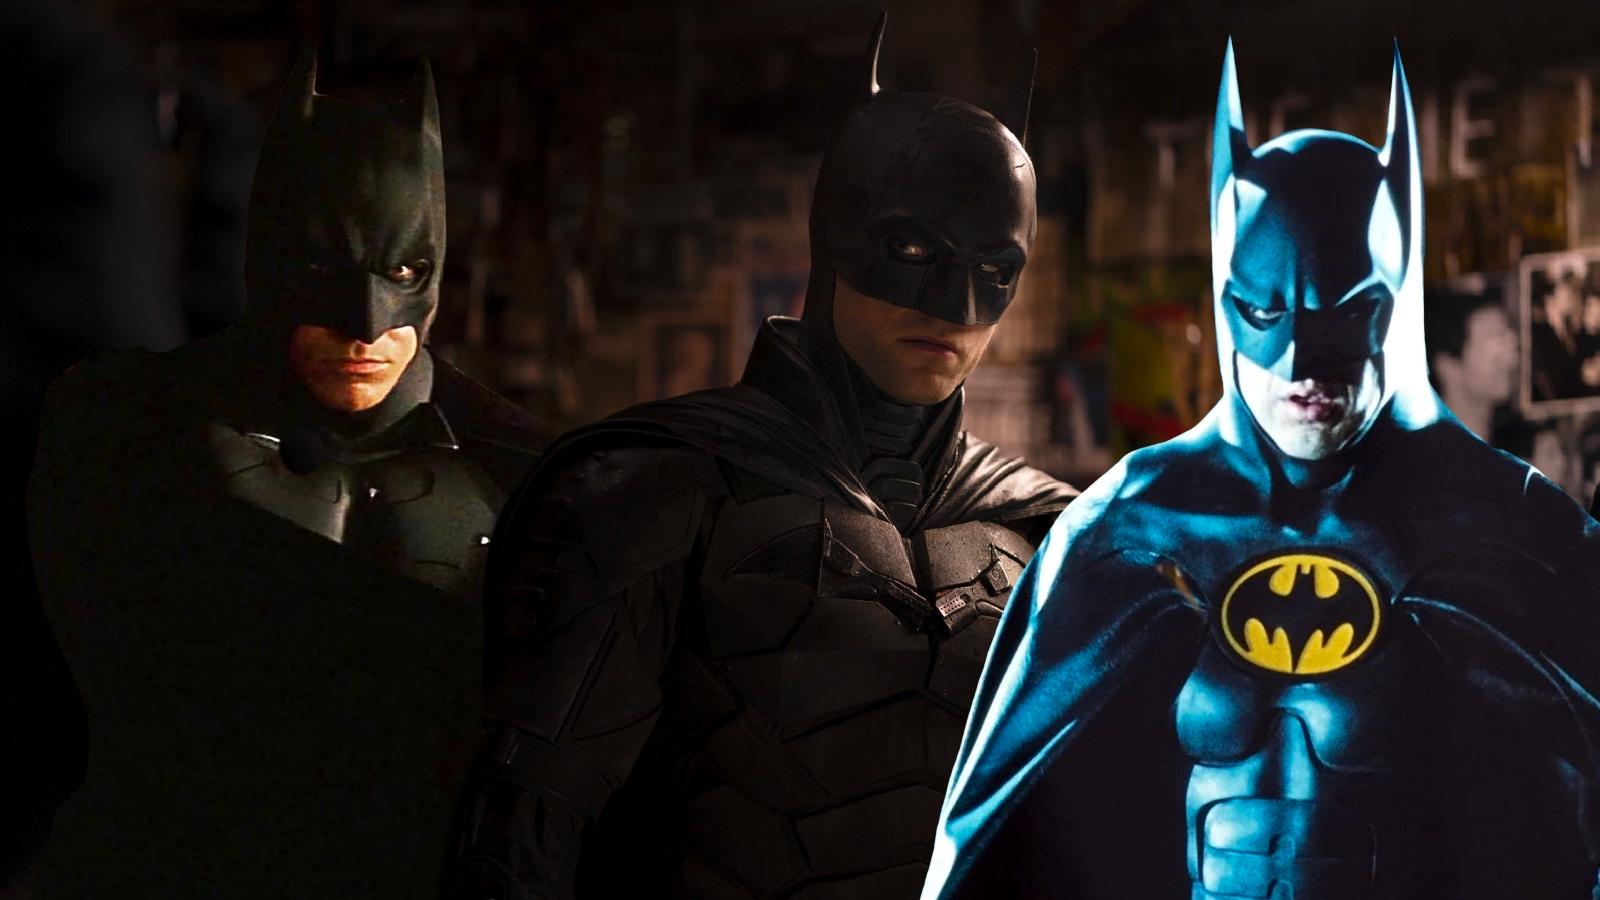 Christian Bale in Batman Begins, Robert Pattinson in The Batmab, and Michael Keaton in Batman